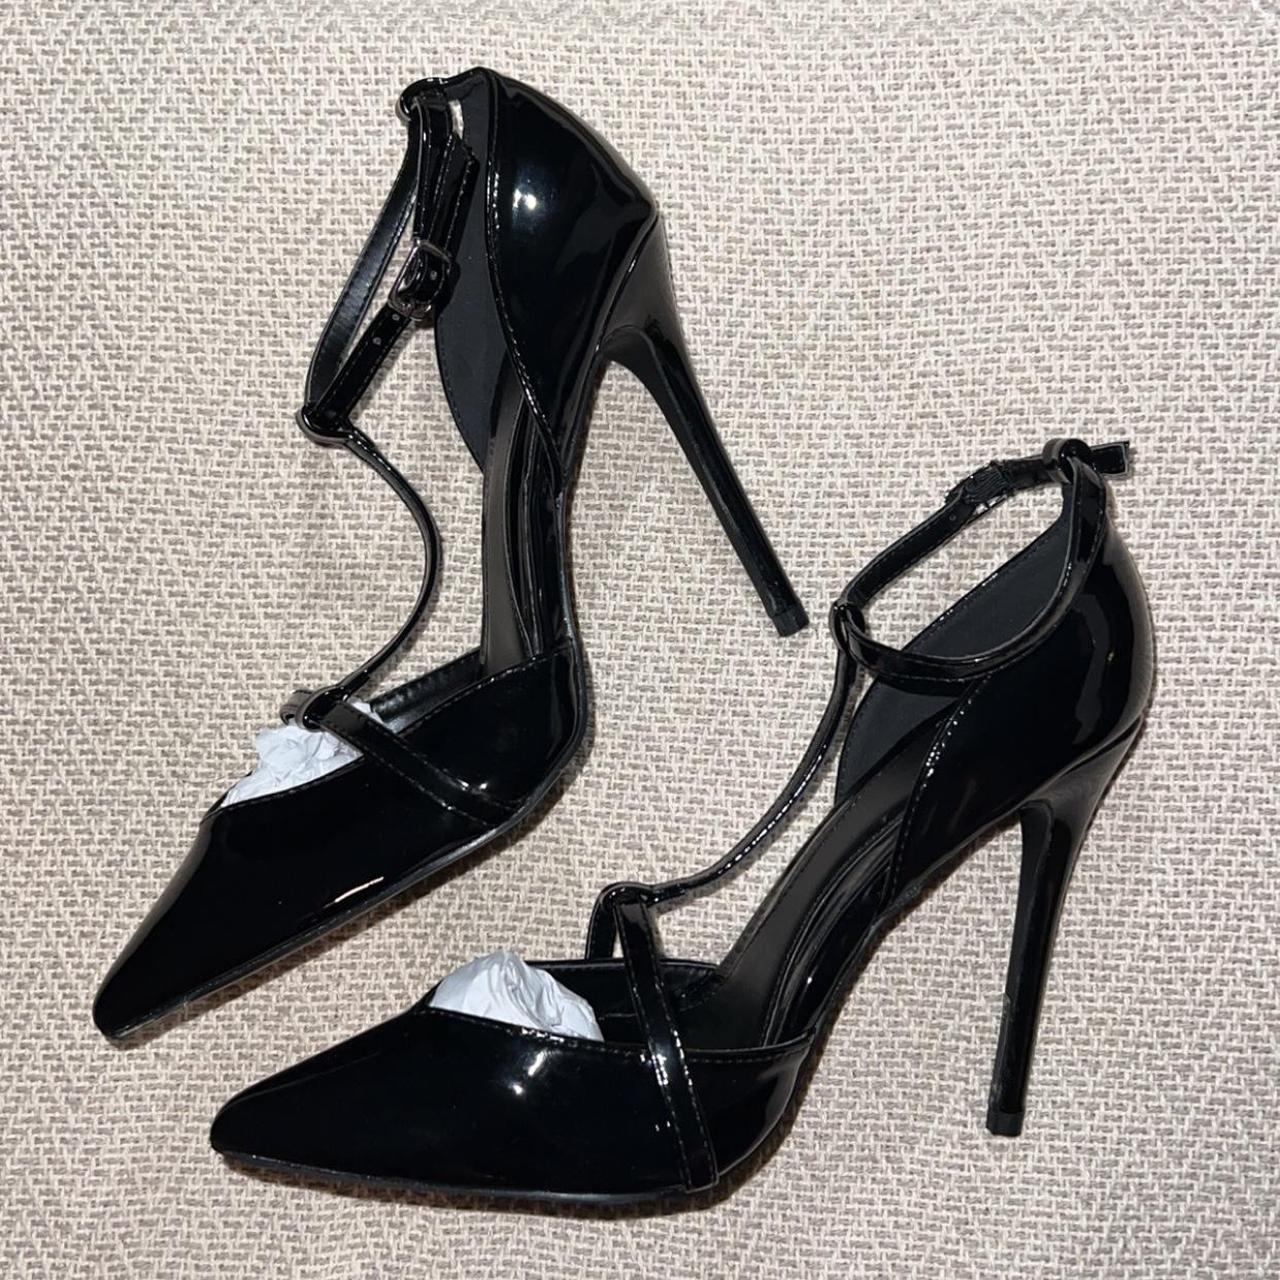 Missguided black heels, brand new, never worn - Depop